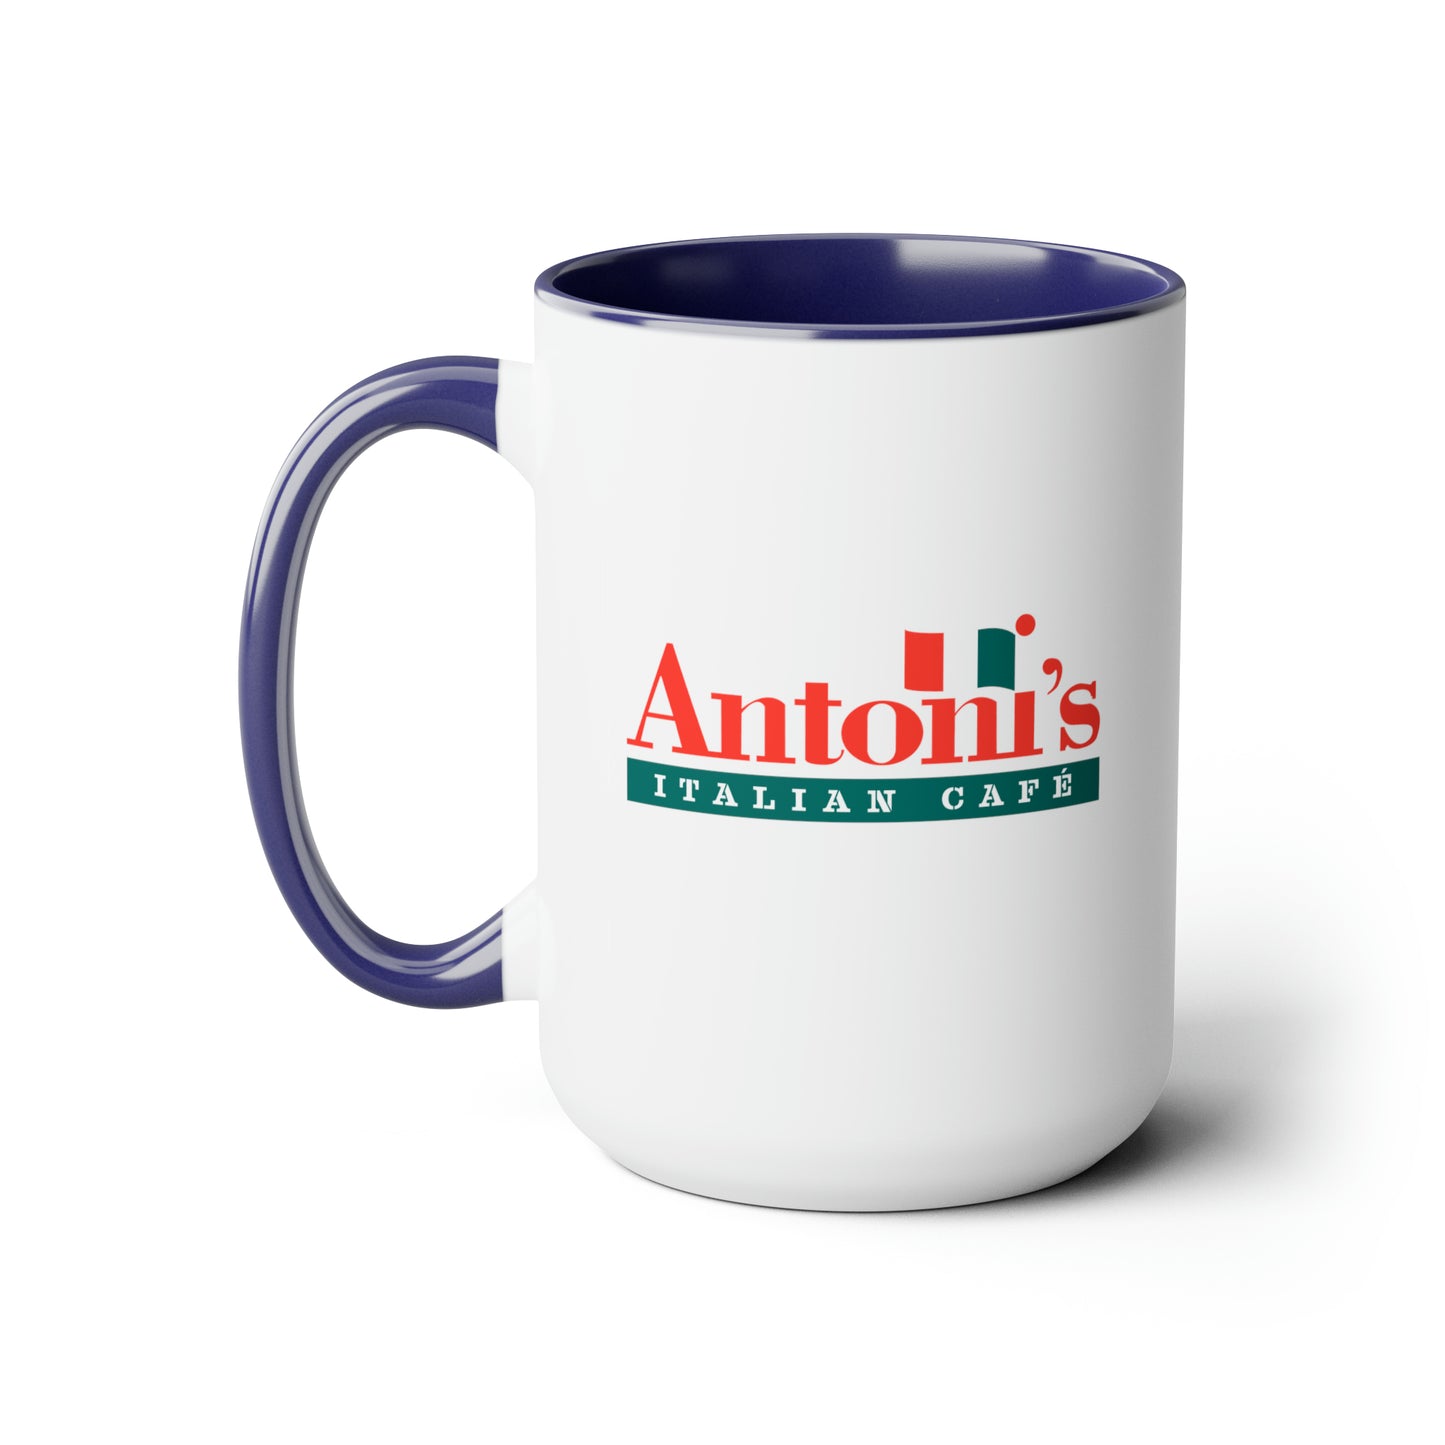 Antoni's Italian Cafe Two-Tone Coffee Mugs, 15oz